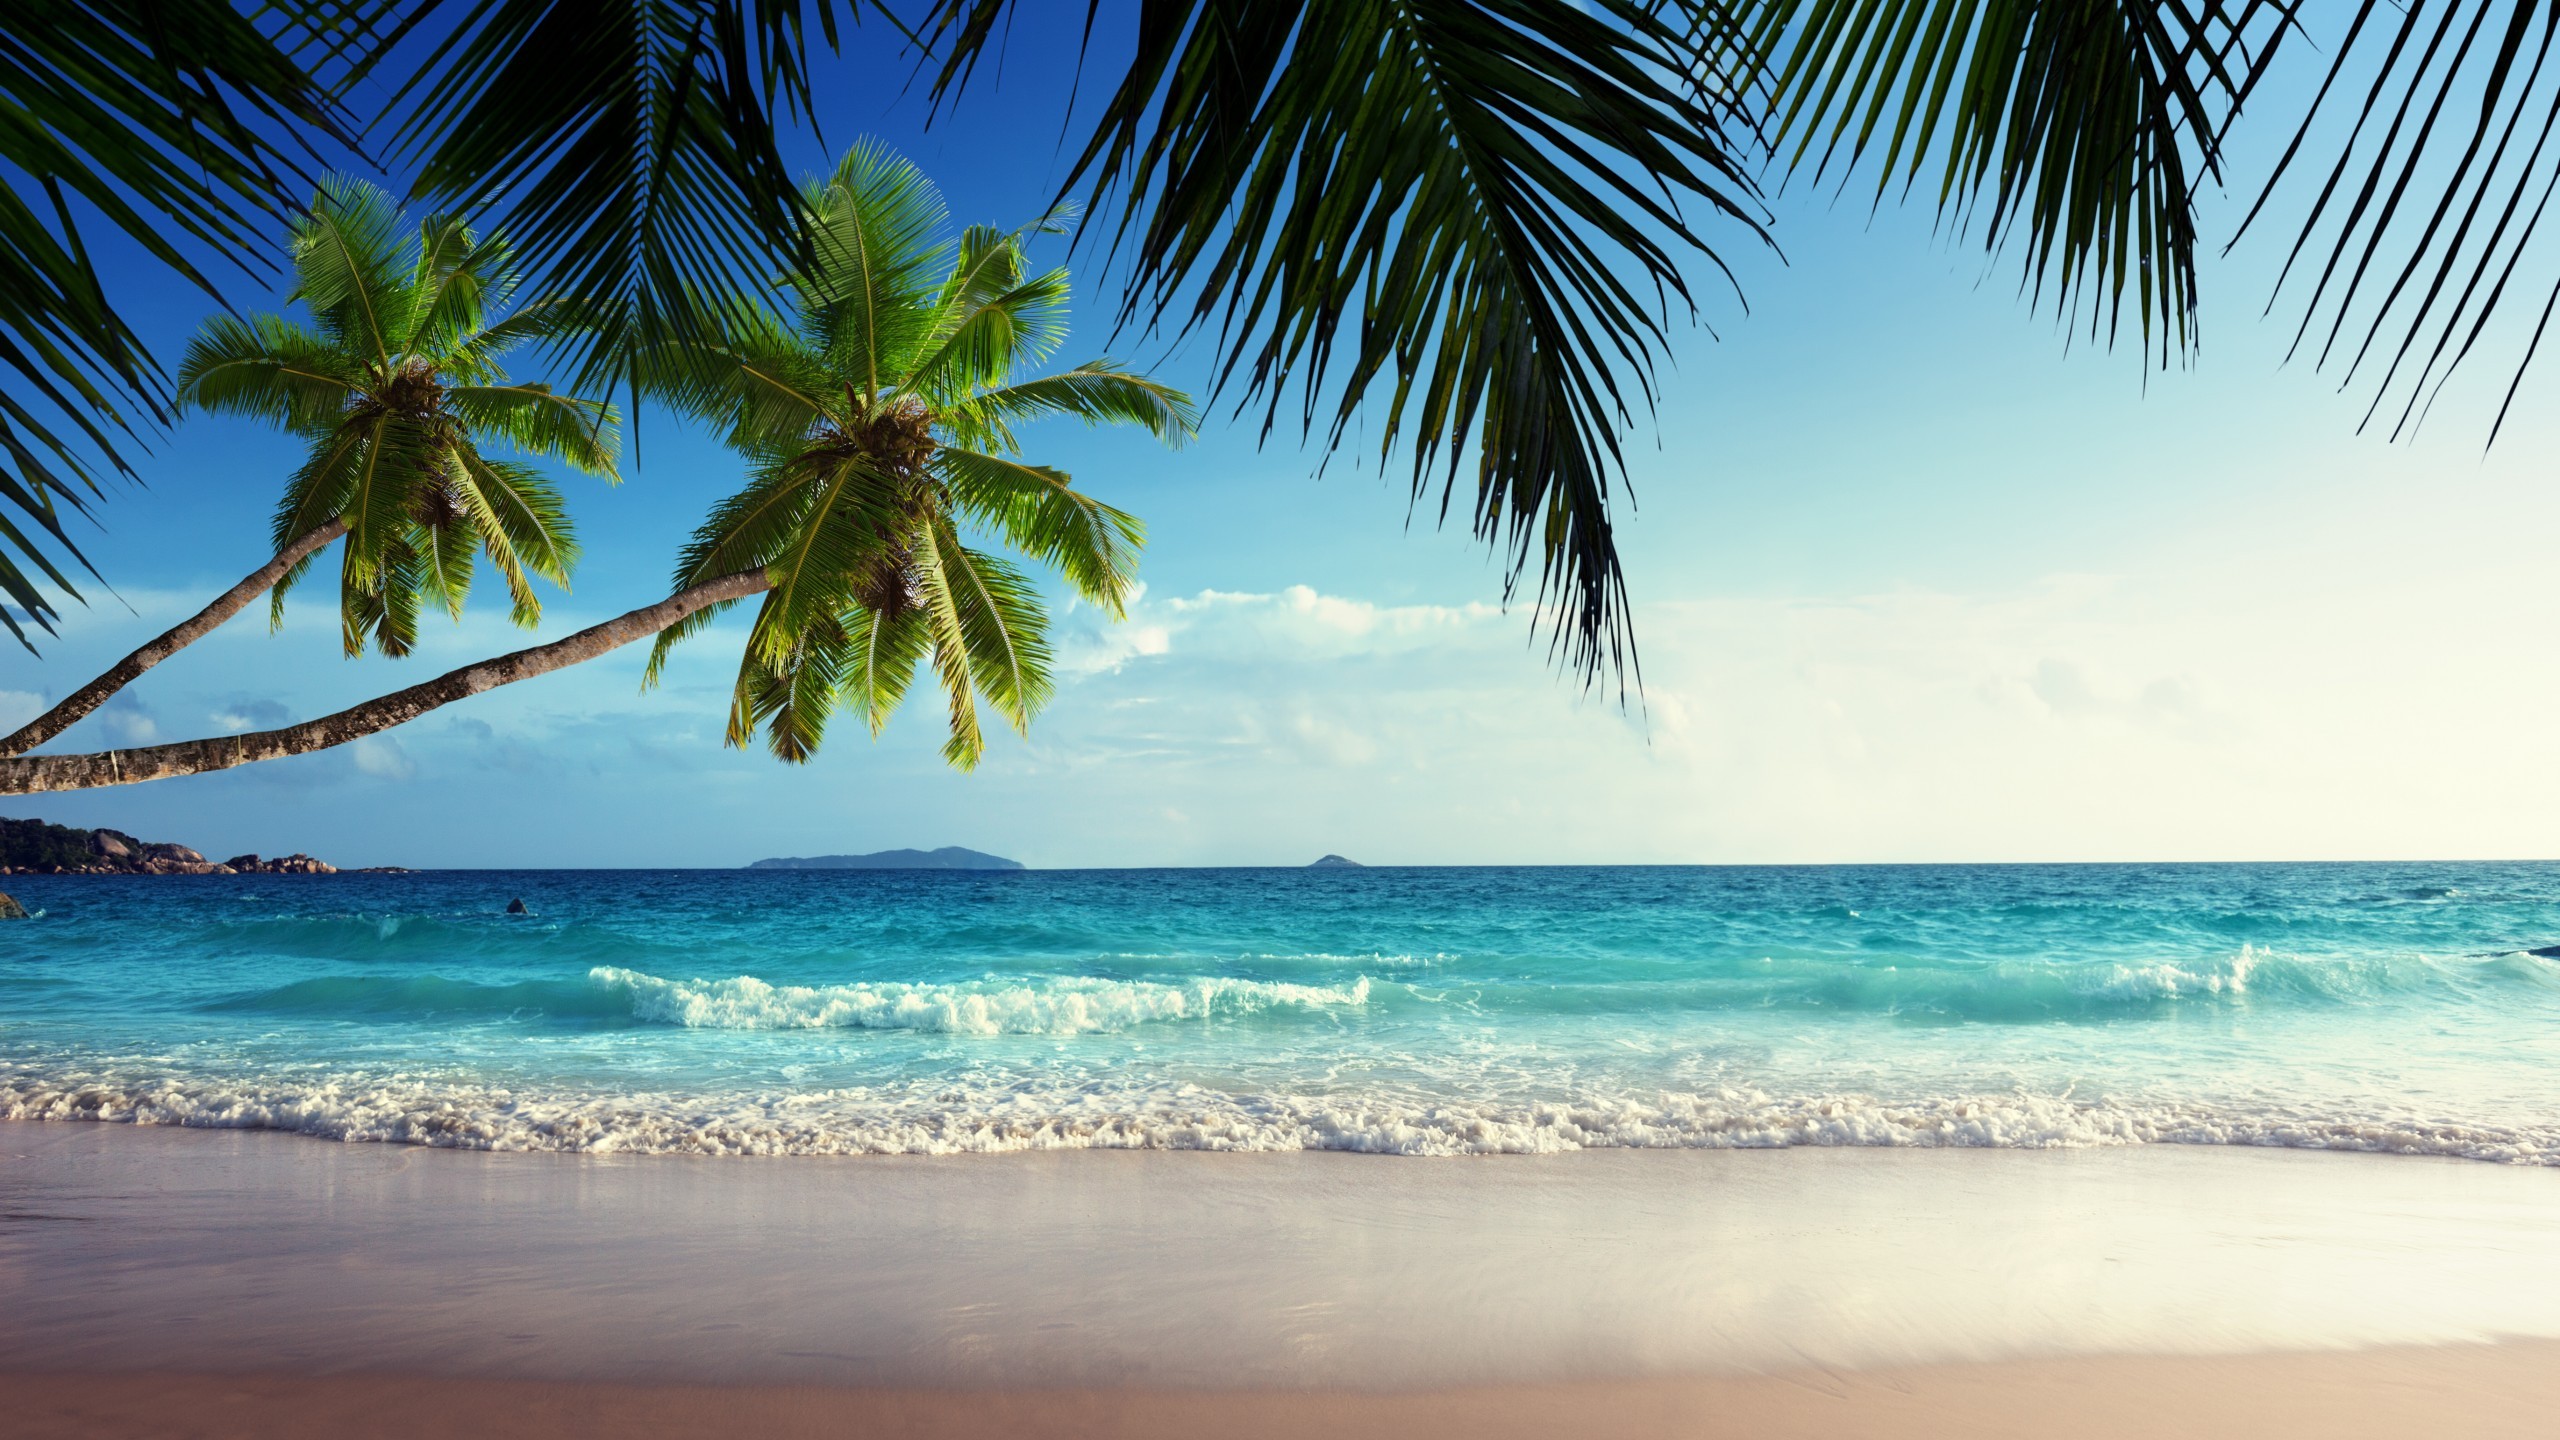 General 2560x1440 beach sand tropical island palm trees sea waves